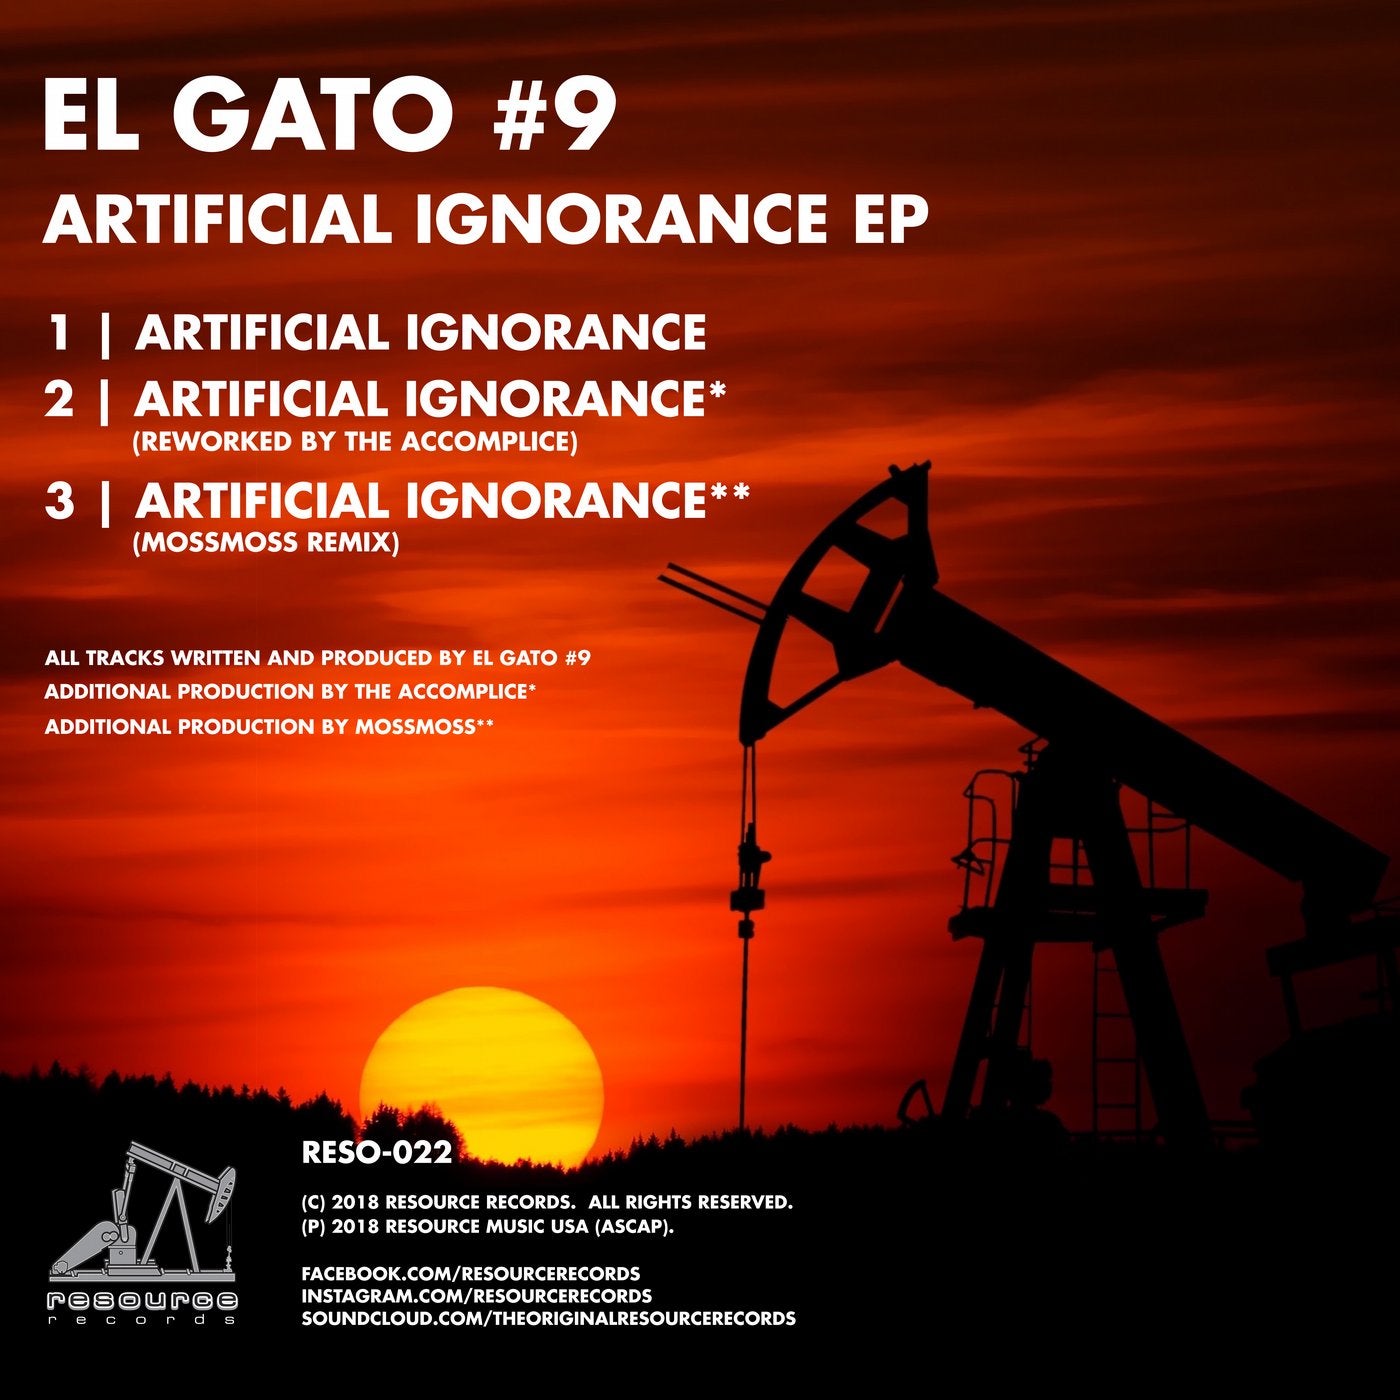 Artificial Ignorance EP